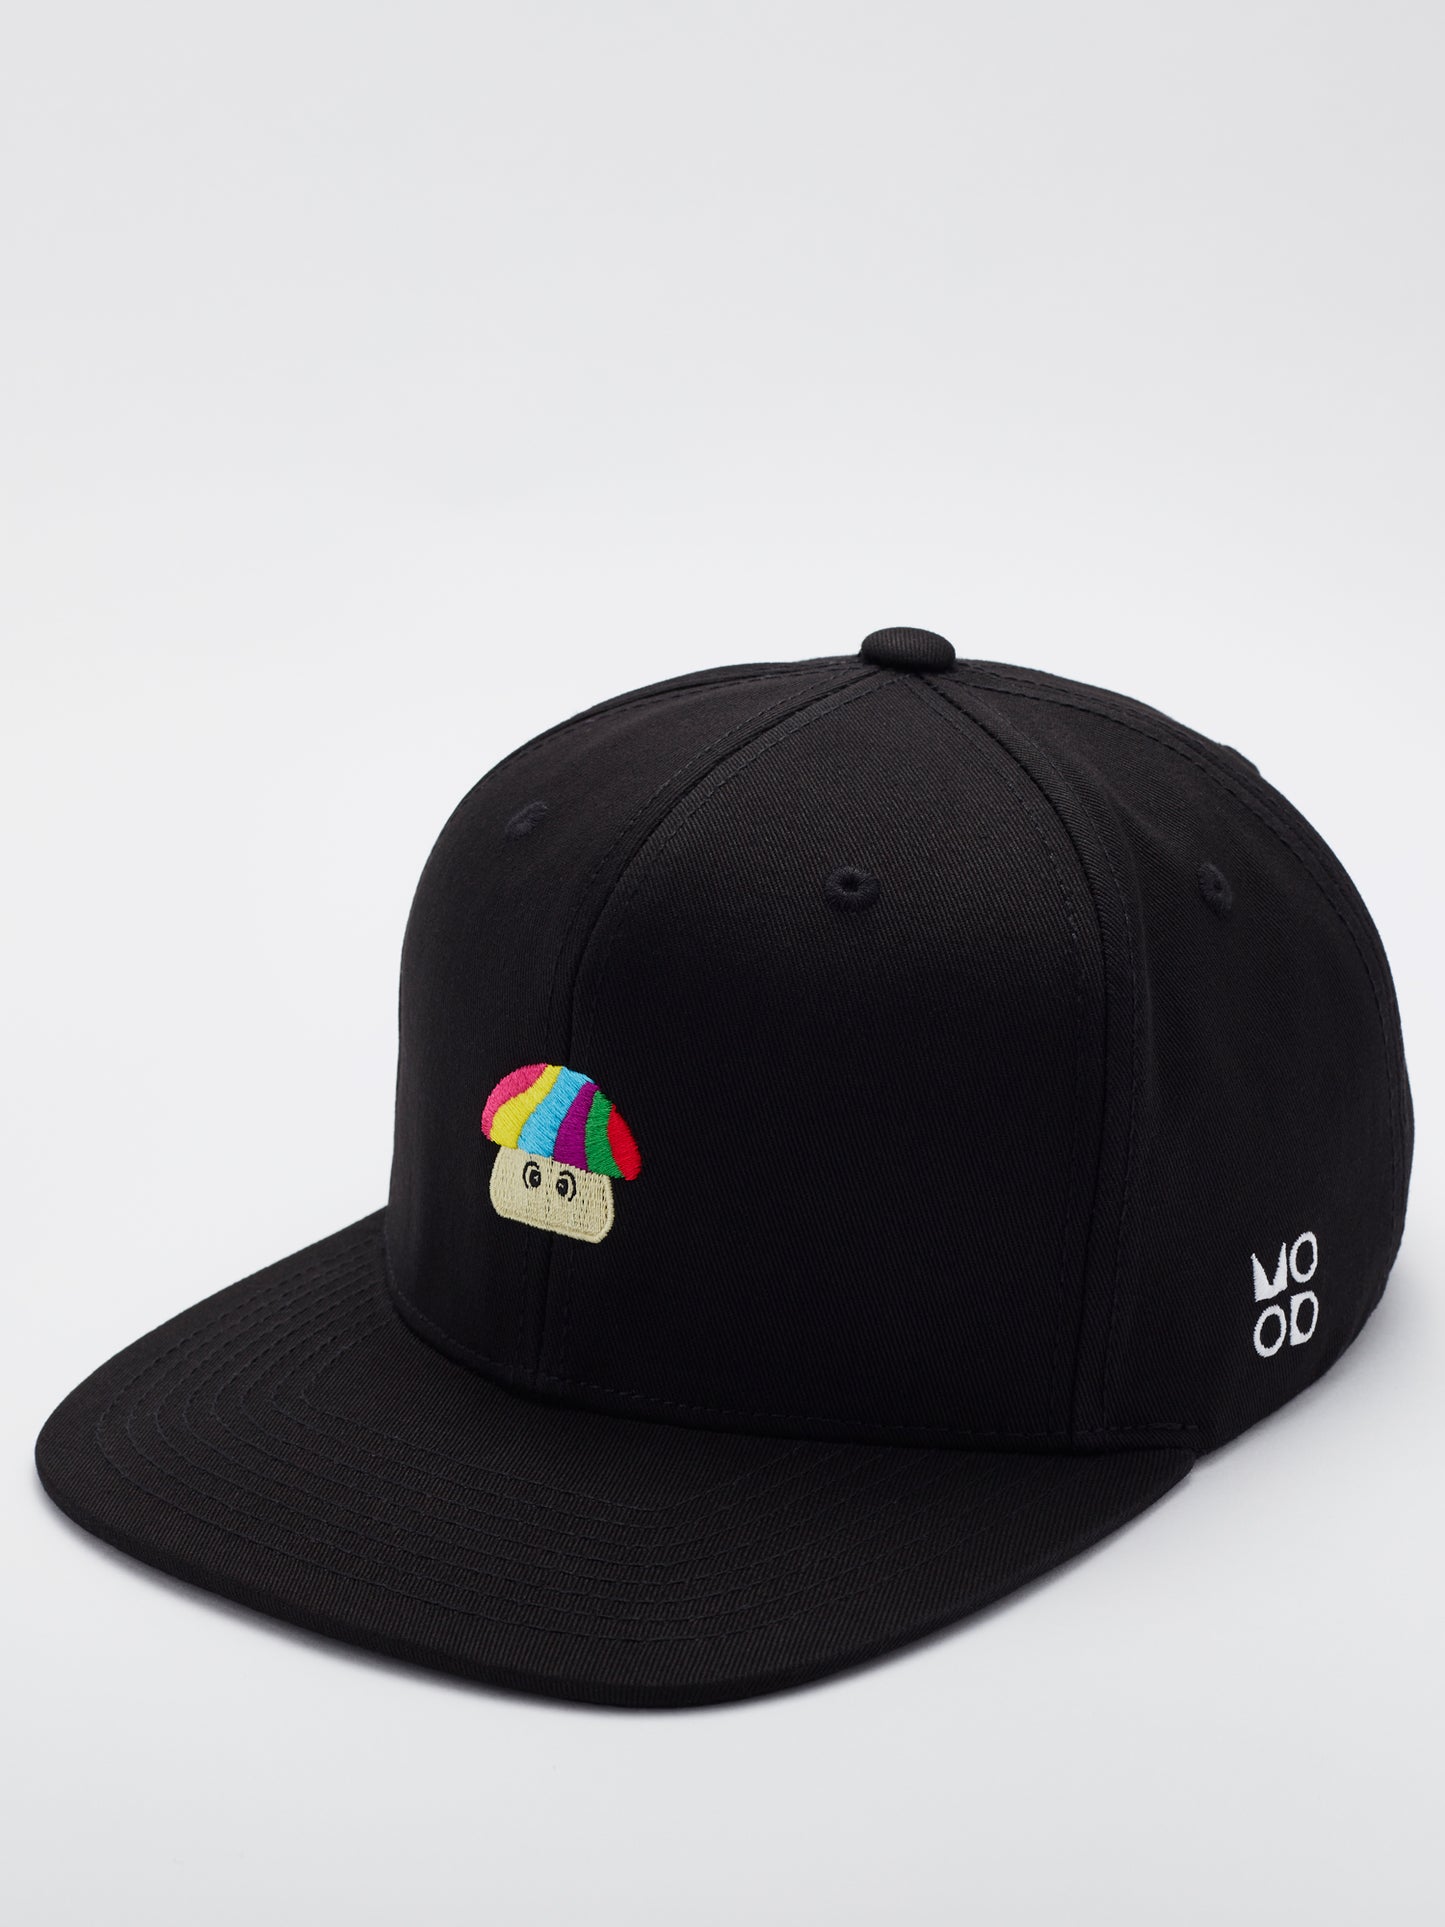 MOOD Brand - Shroom OG baseball cap in black flat brim - side view